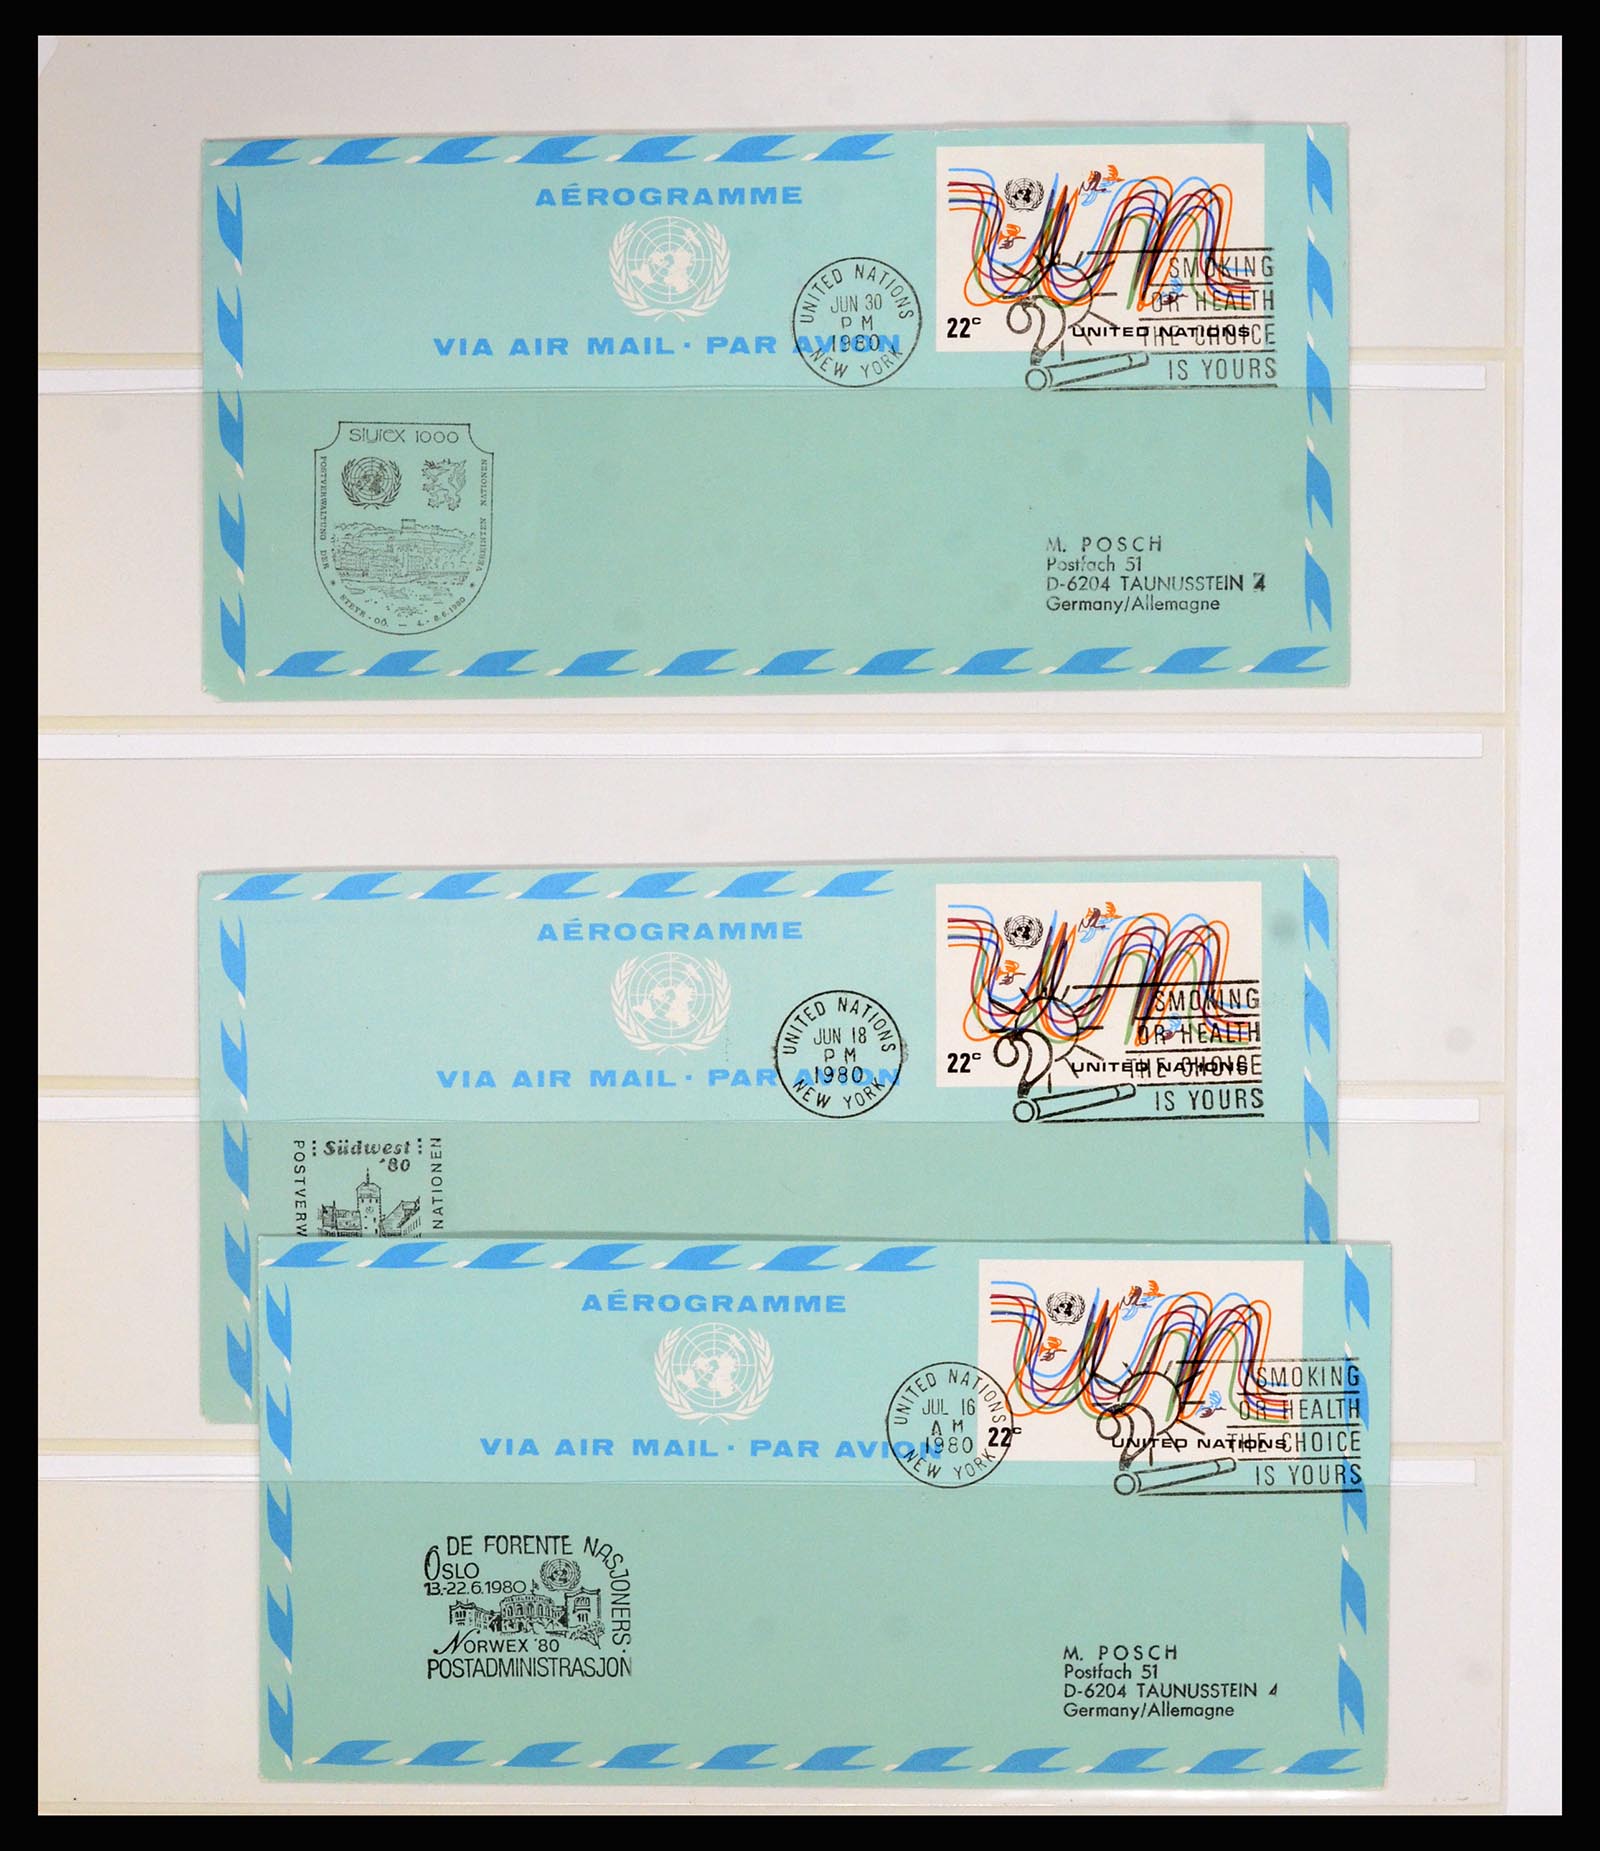 36627 072 - Stamp collection 36627 World aerograms.